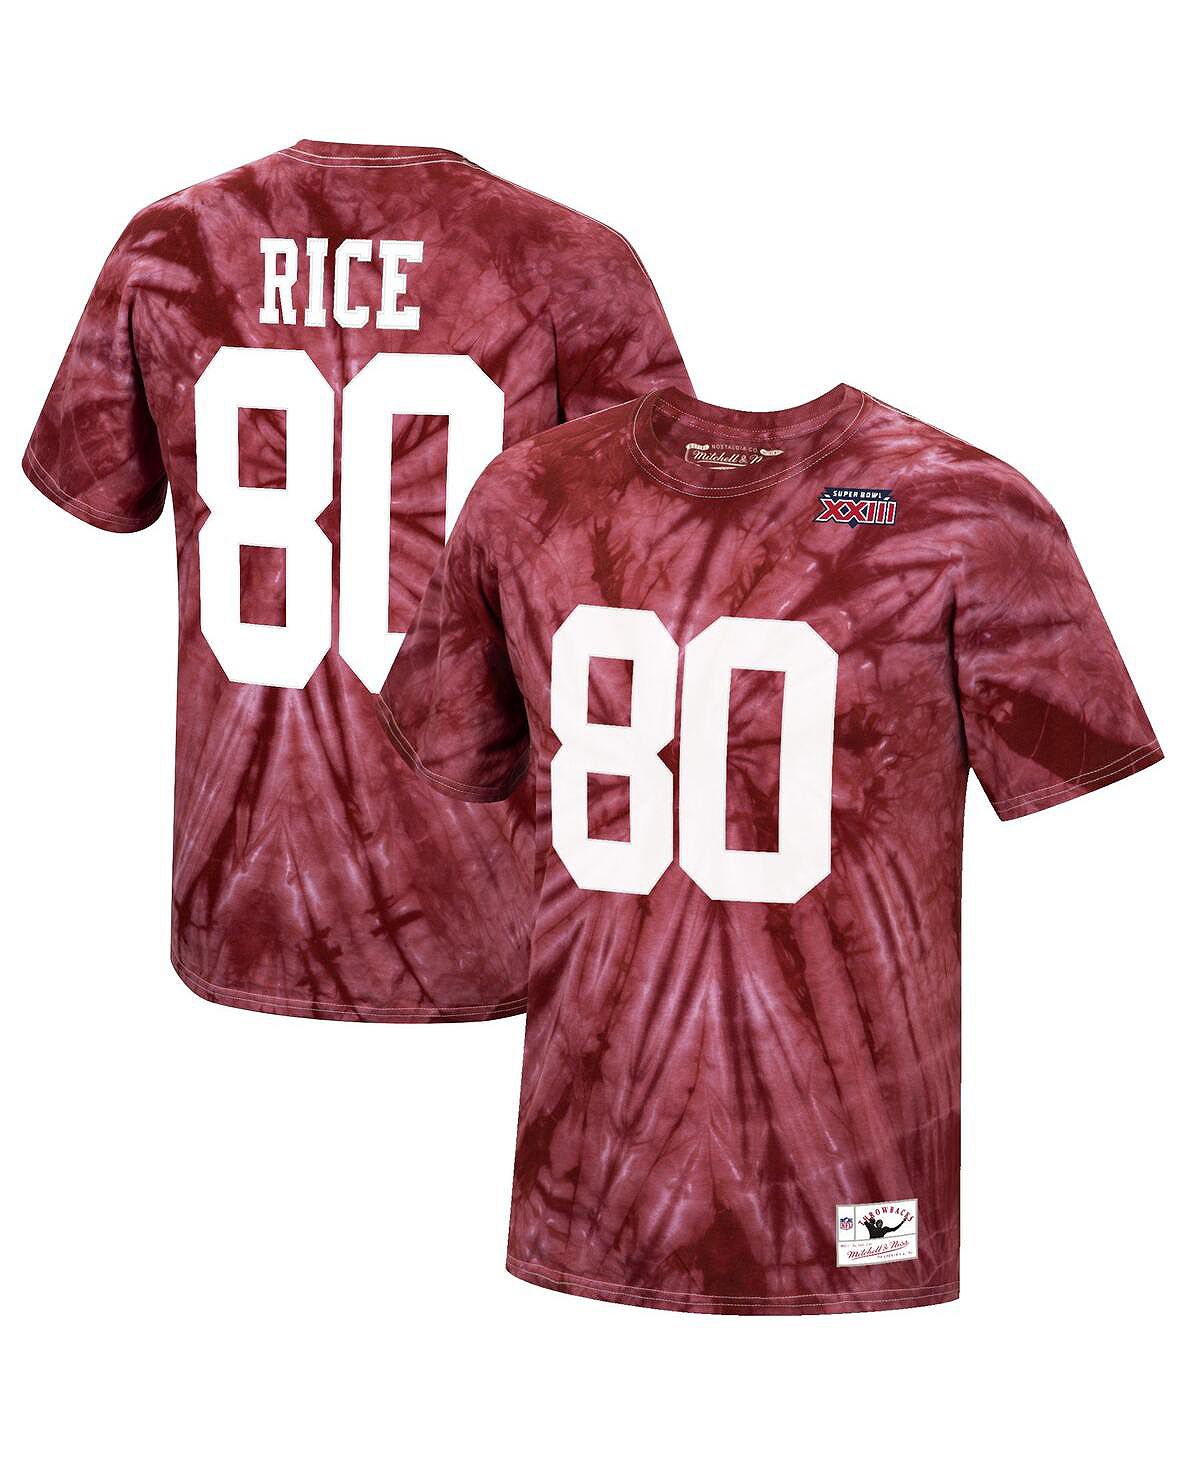 Мужская футболка jerry rice scarlet san francisco 49ers tie-dye super bowl xxiii с именем и номером игрока на пенсии Mitchell & Ness